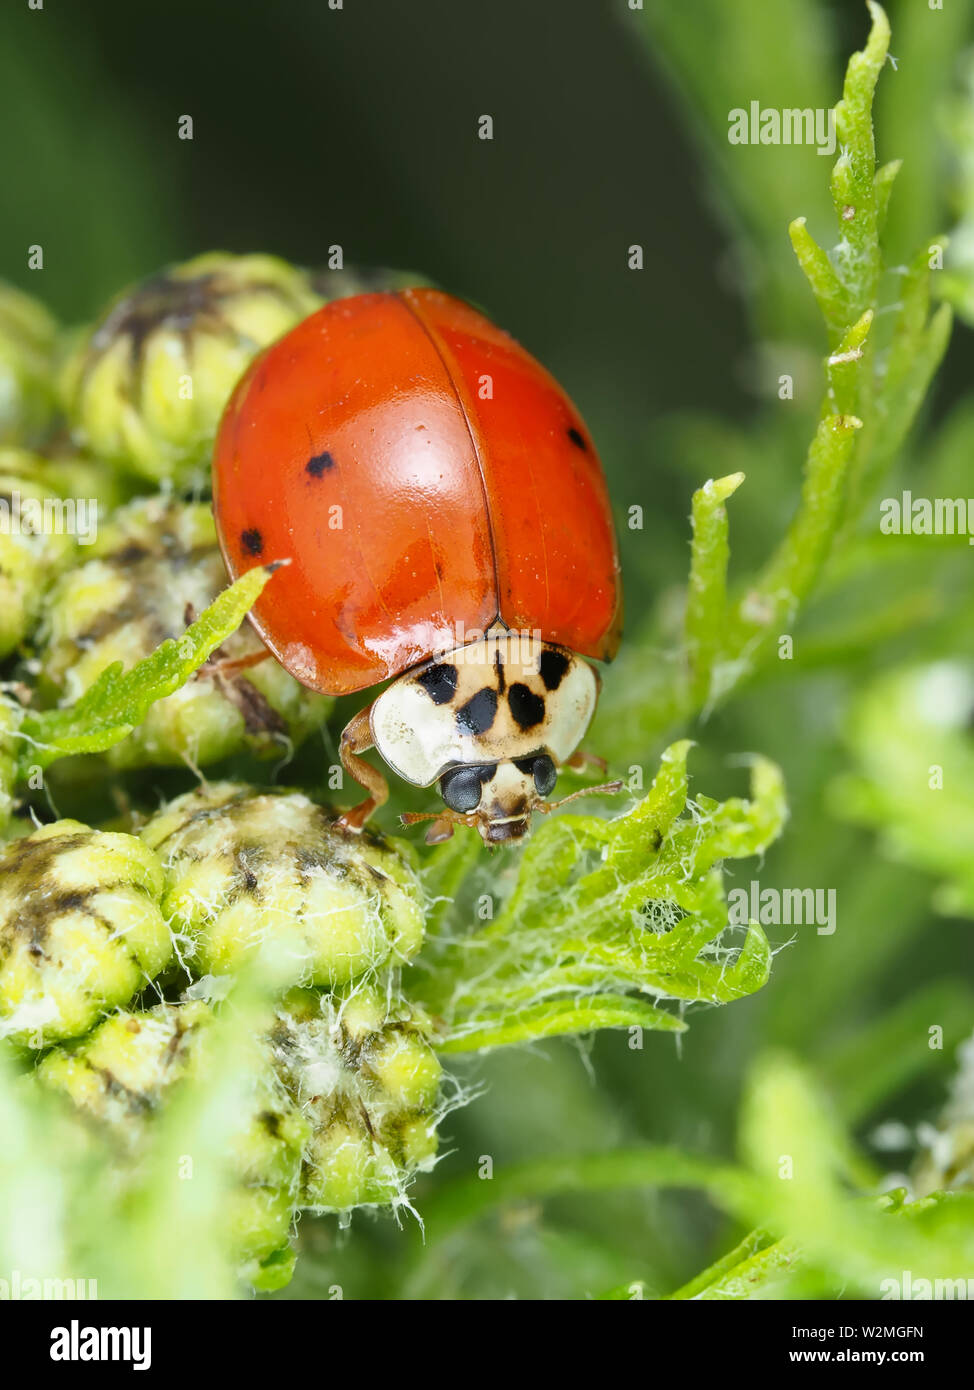 Harmonia axyridis - Asian ladybeetle Stock Photo